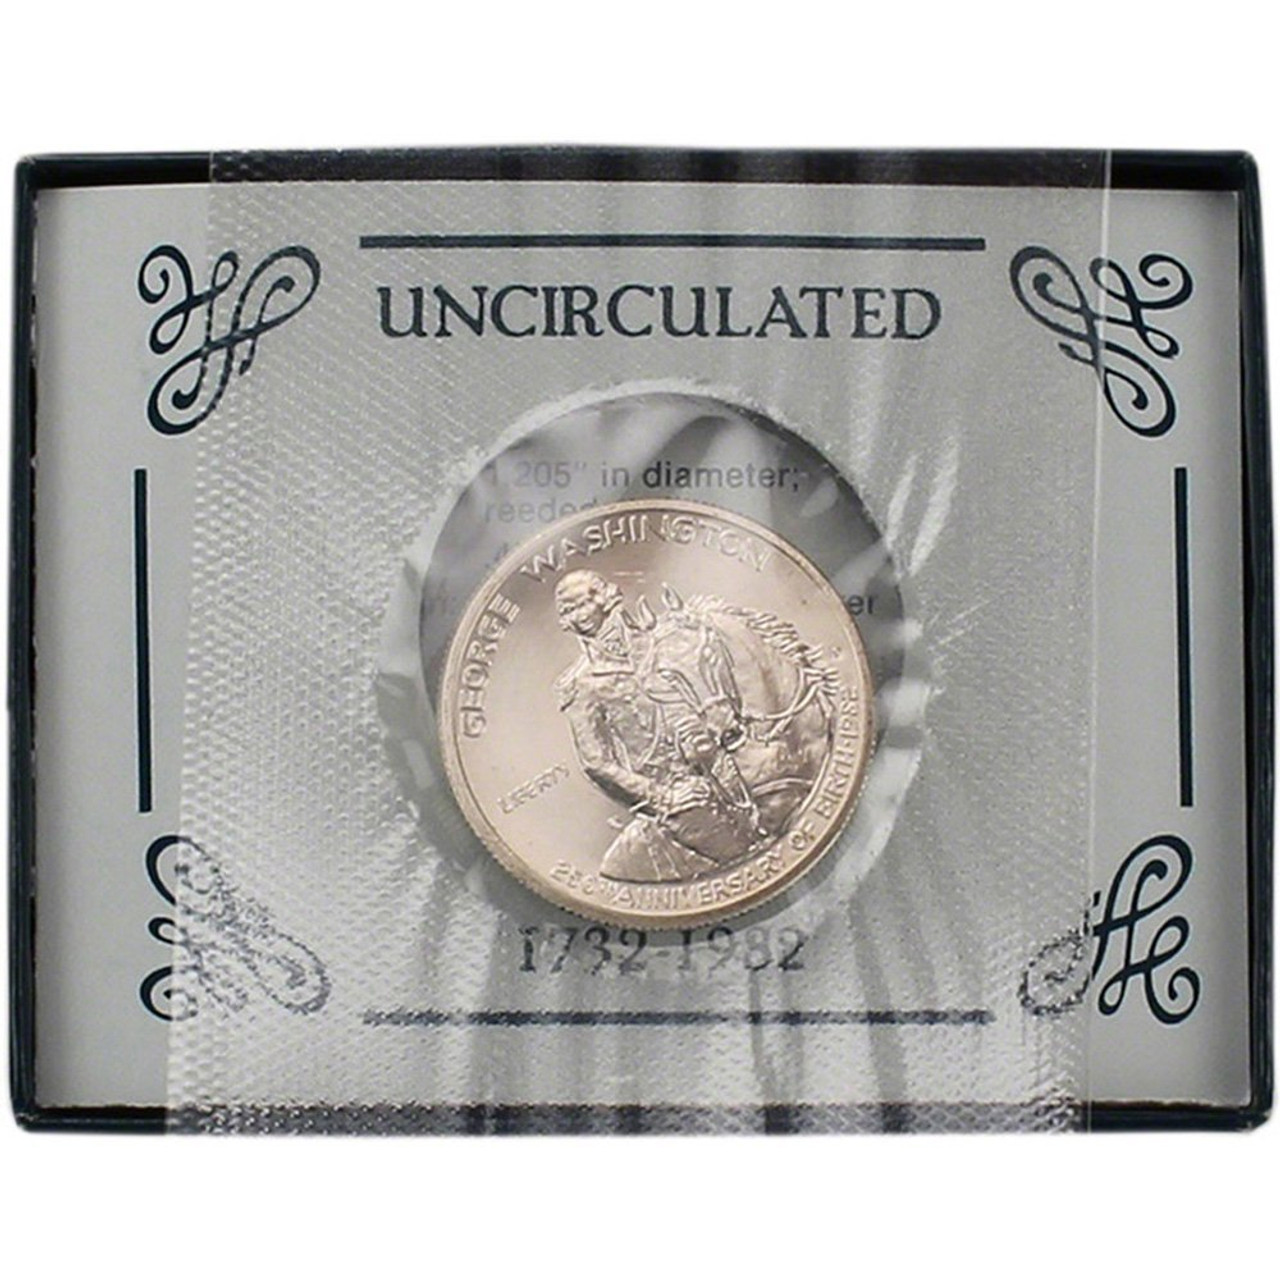 G 1982 U.S Mint Washington 90% Silver "PROOF" Half Dollar Commemorative